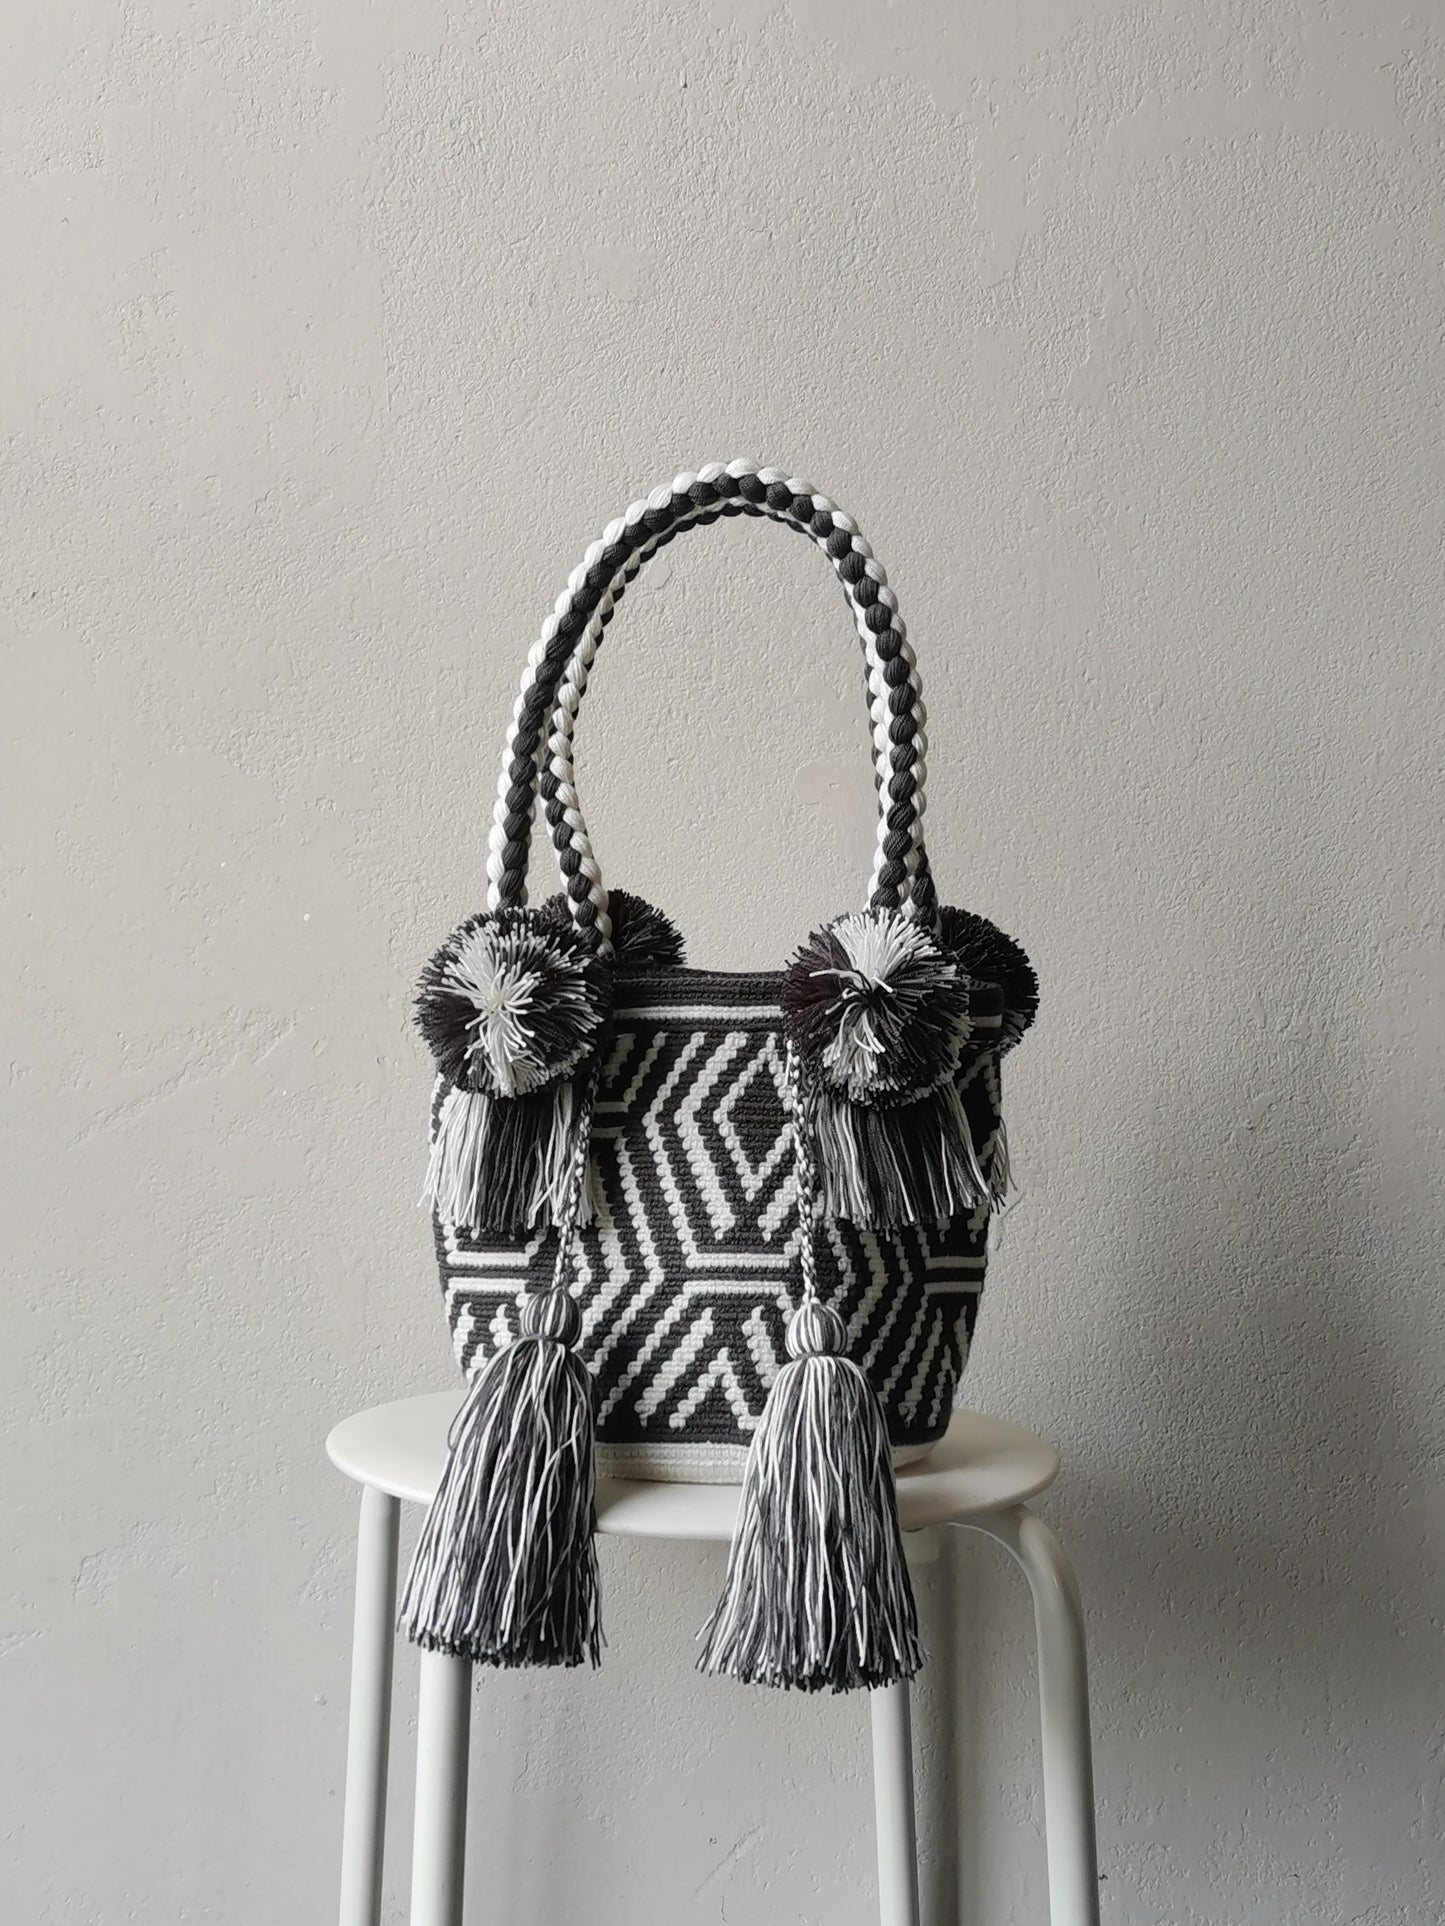 White and dark gray M mochila handbag